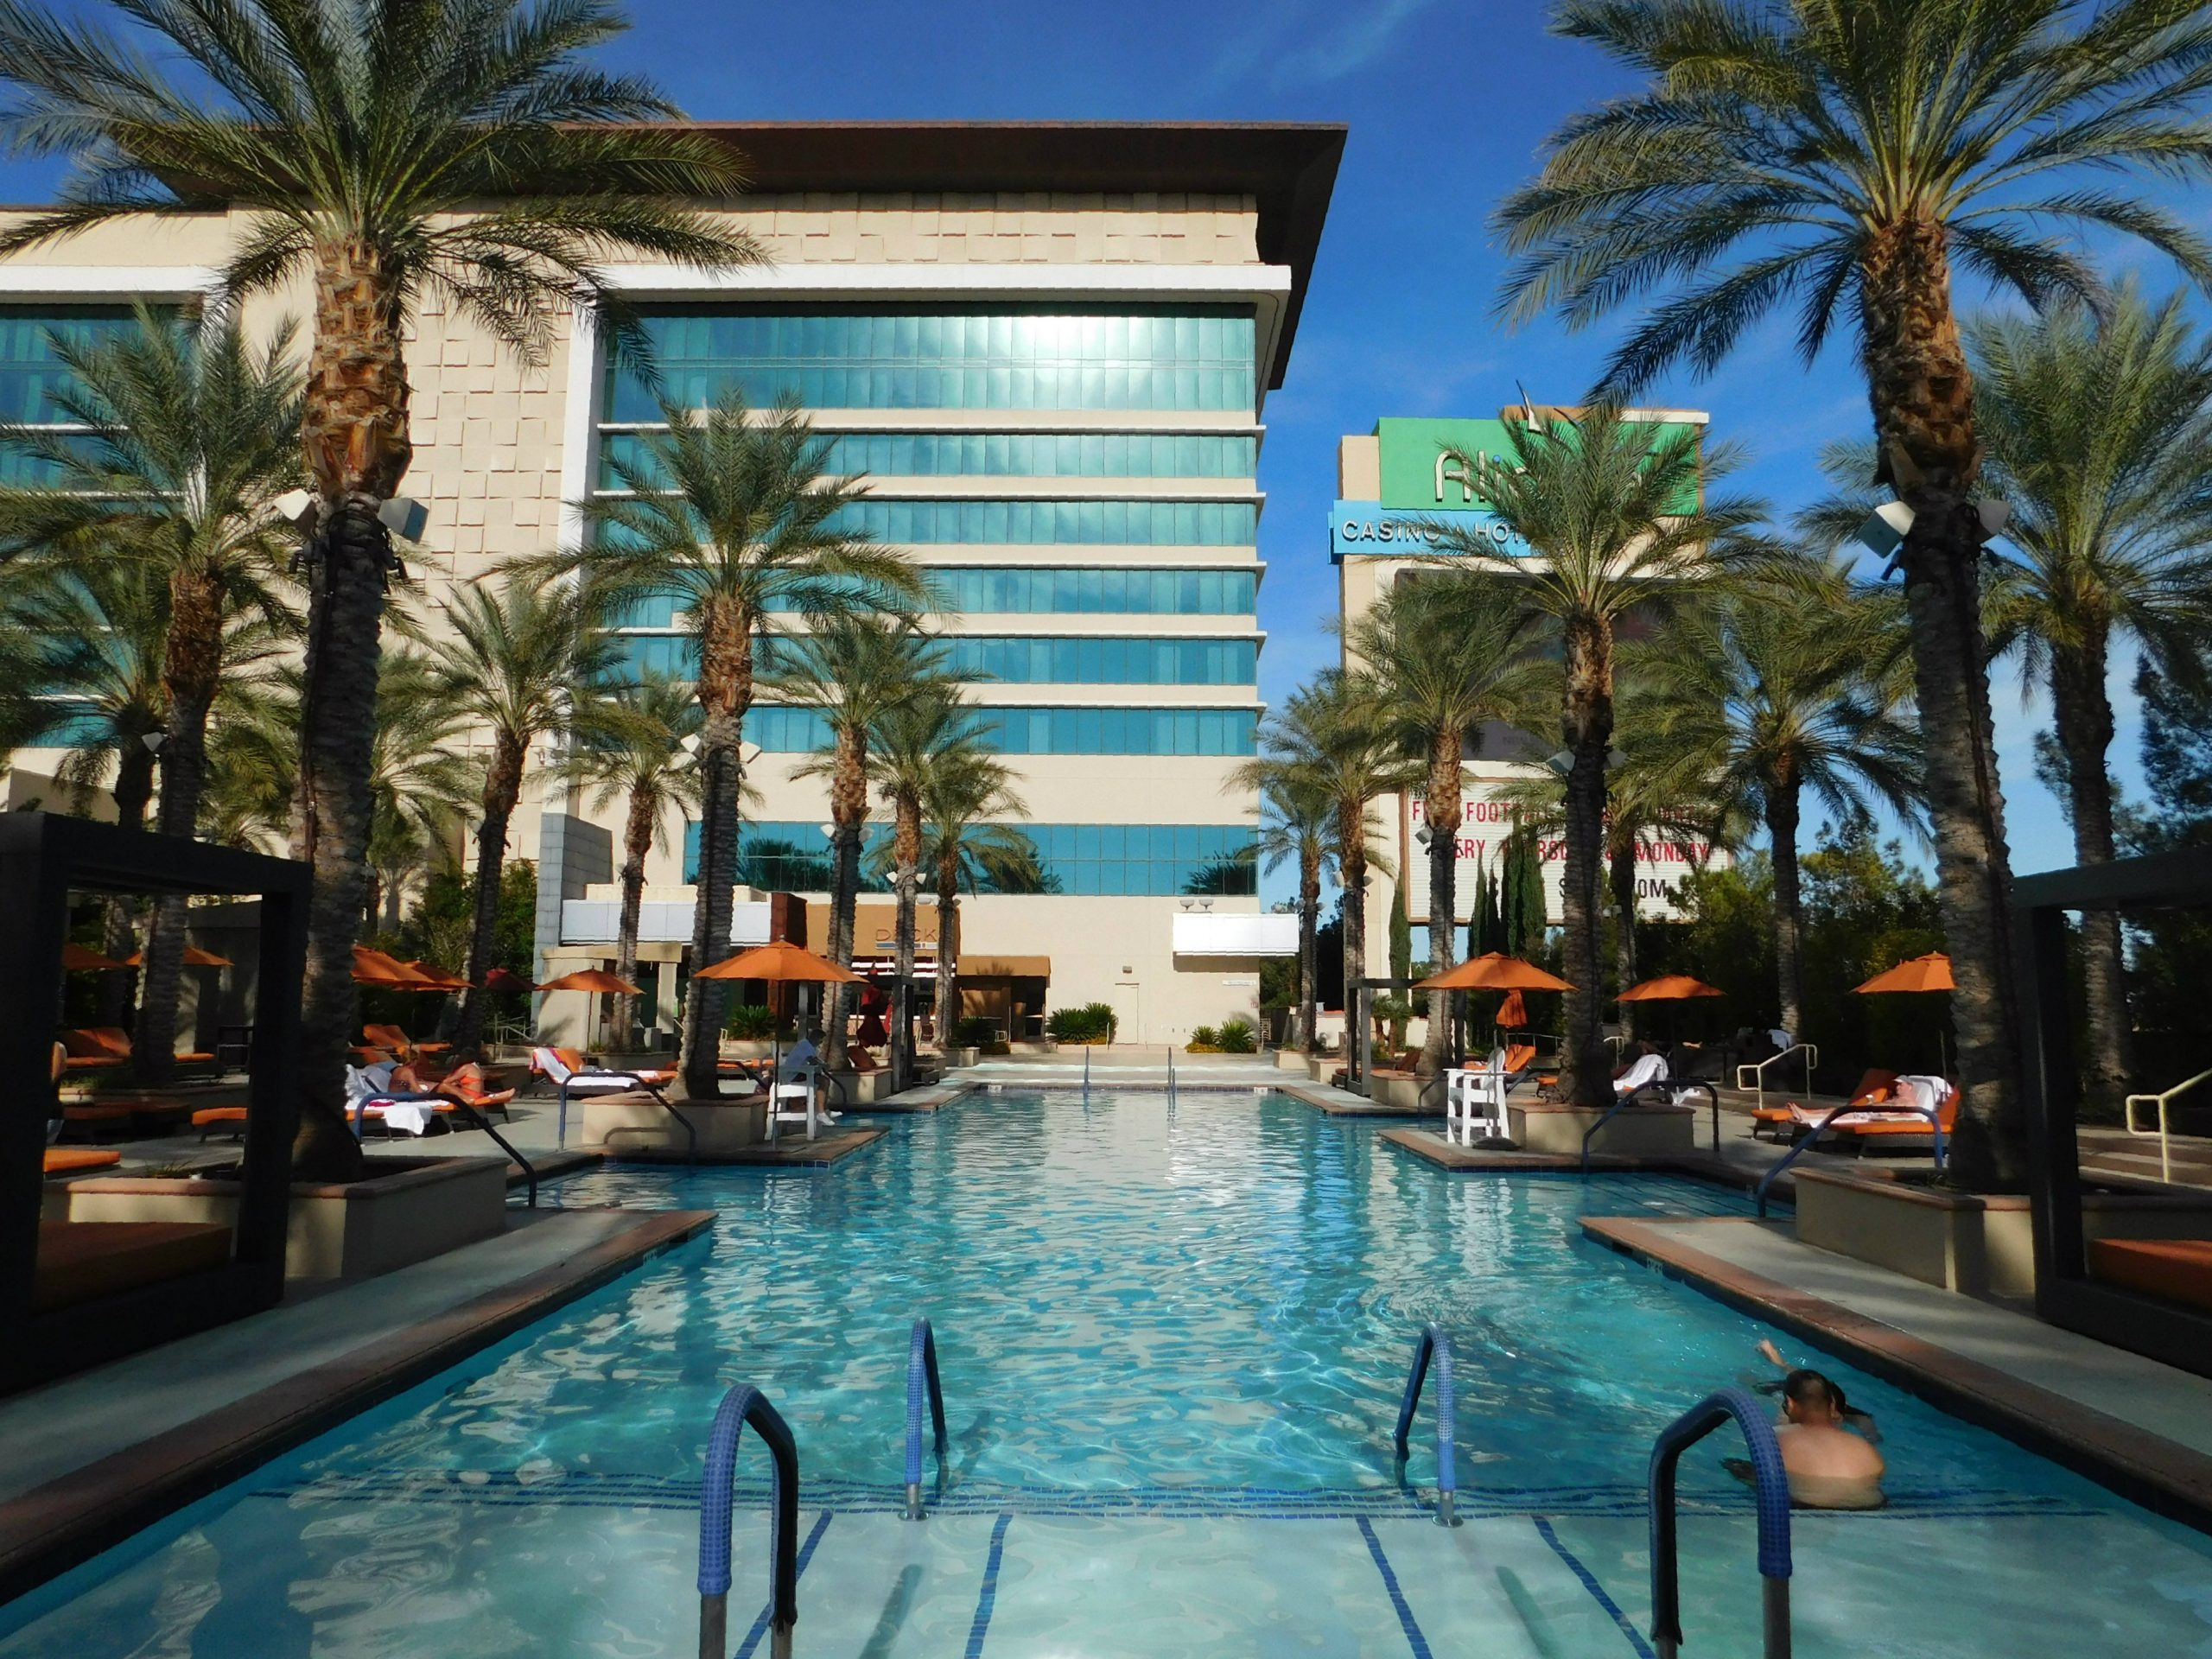 Pool at Aliante Resort in Las Vegas